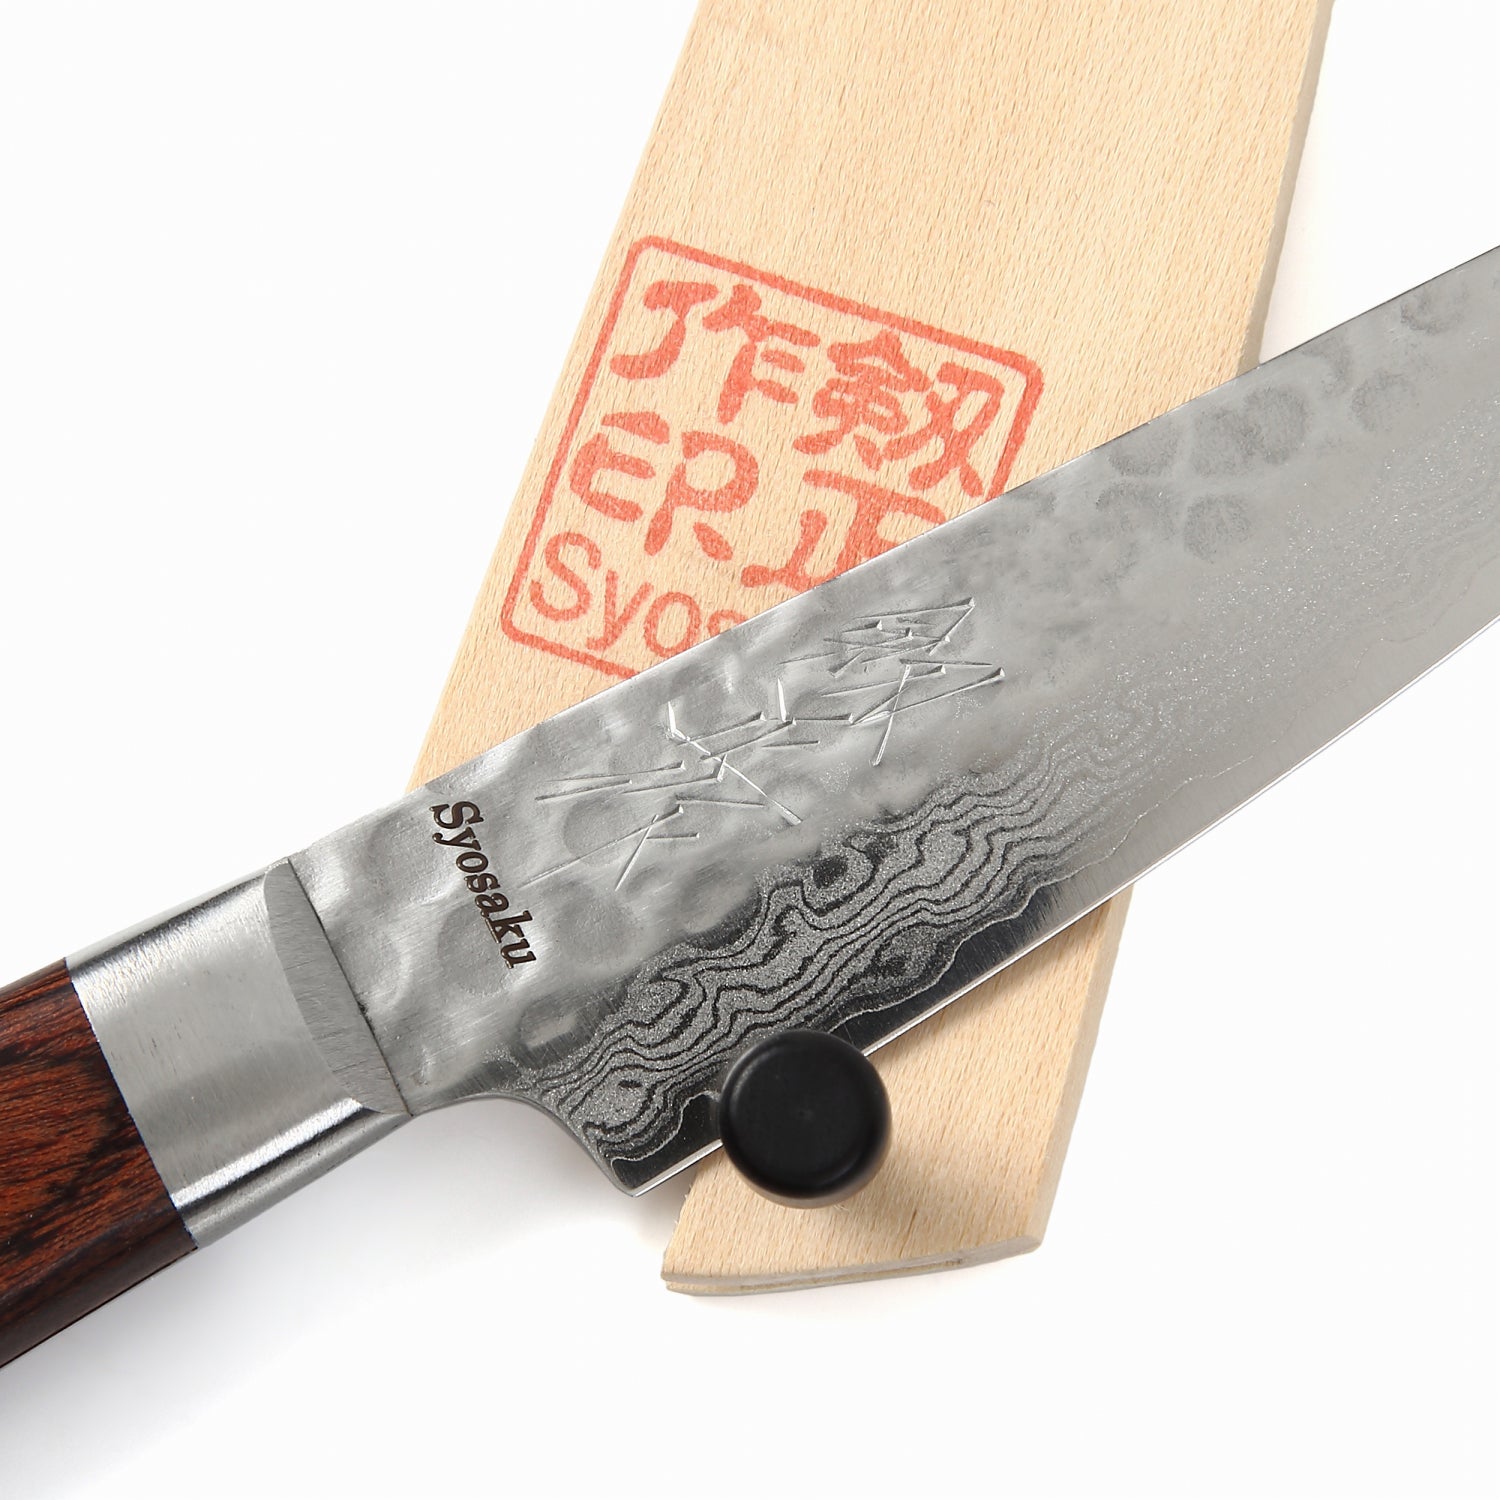 Damascus Steel Chef Knife 8 Inch Restaurant Kitchen Handmade Leather Sheath  NEW